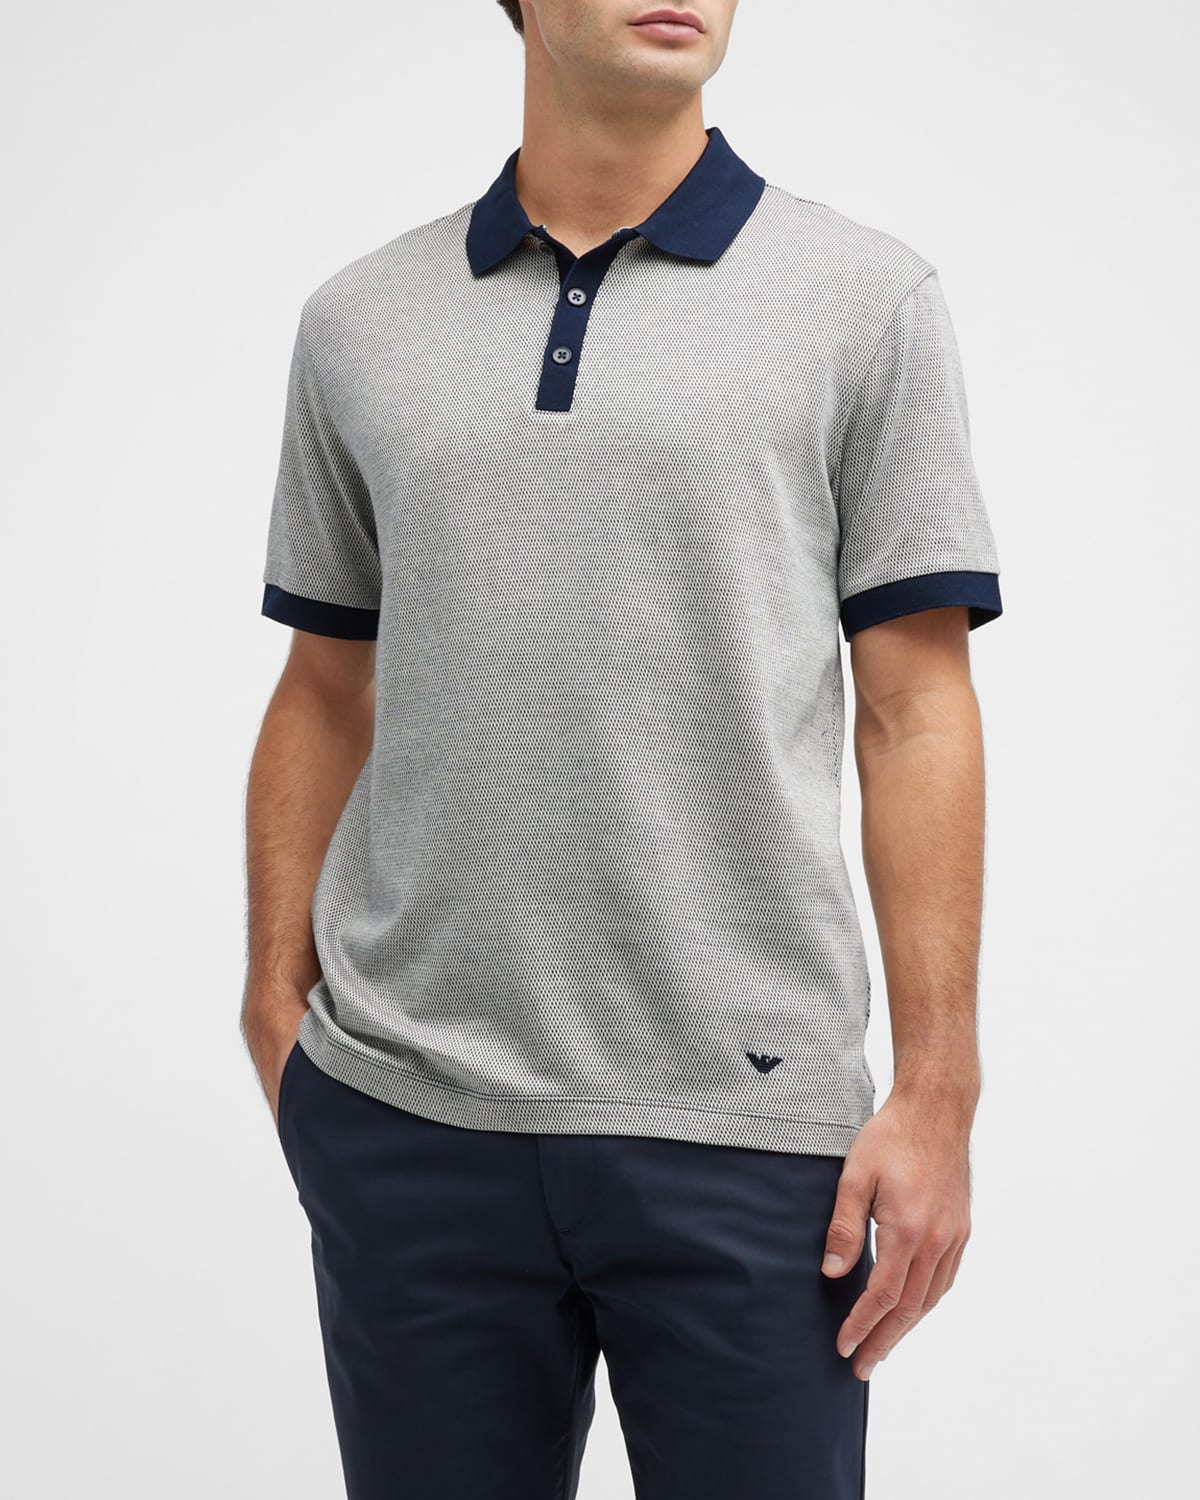 Emporio Armani Men's Micro-Pattern Polo Shirt